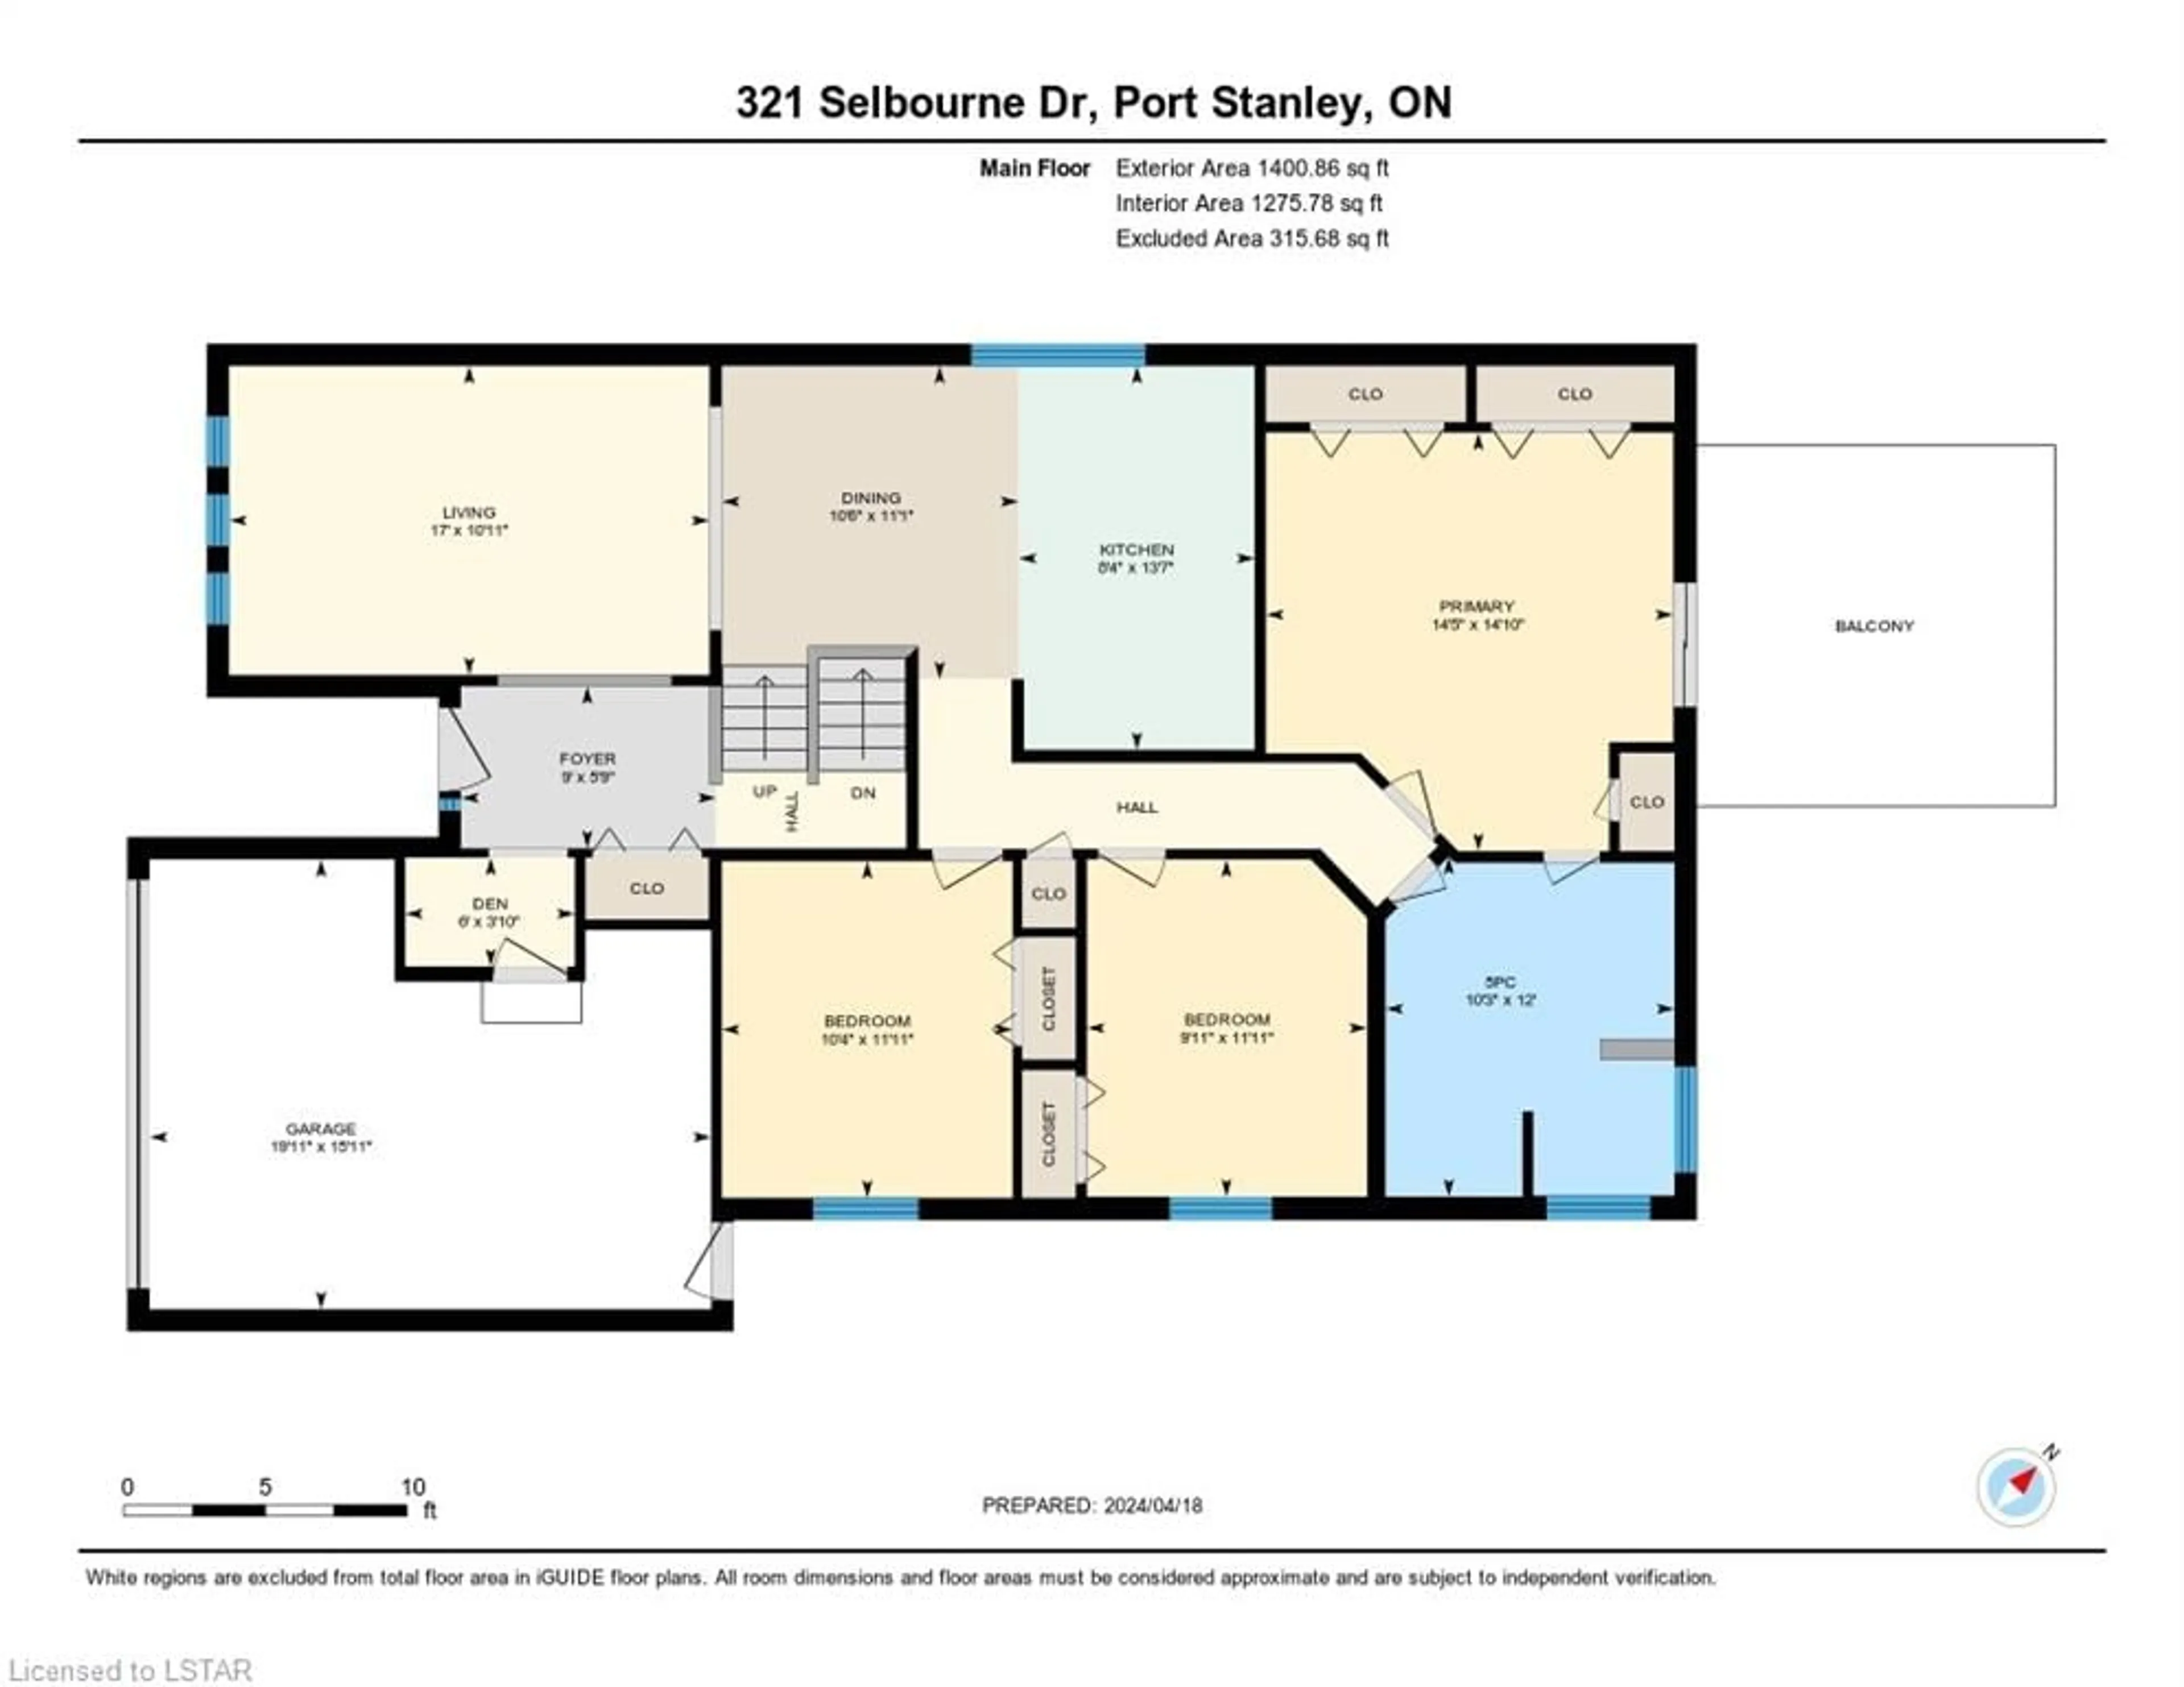 Floor plan for 321 Selbourne Dr, Port Stanley Ontario N5L 1B1